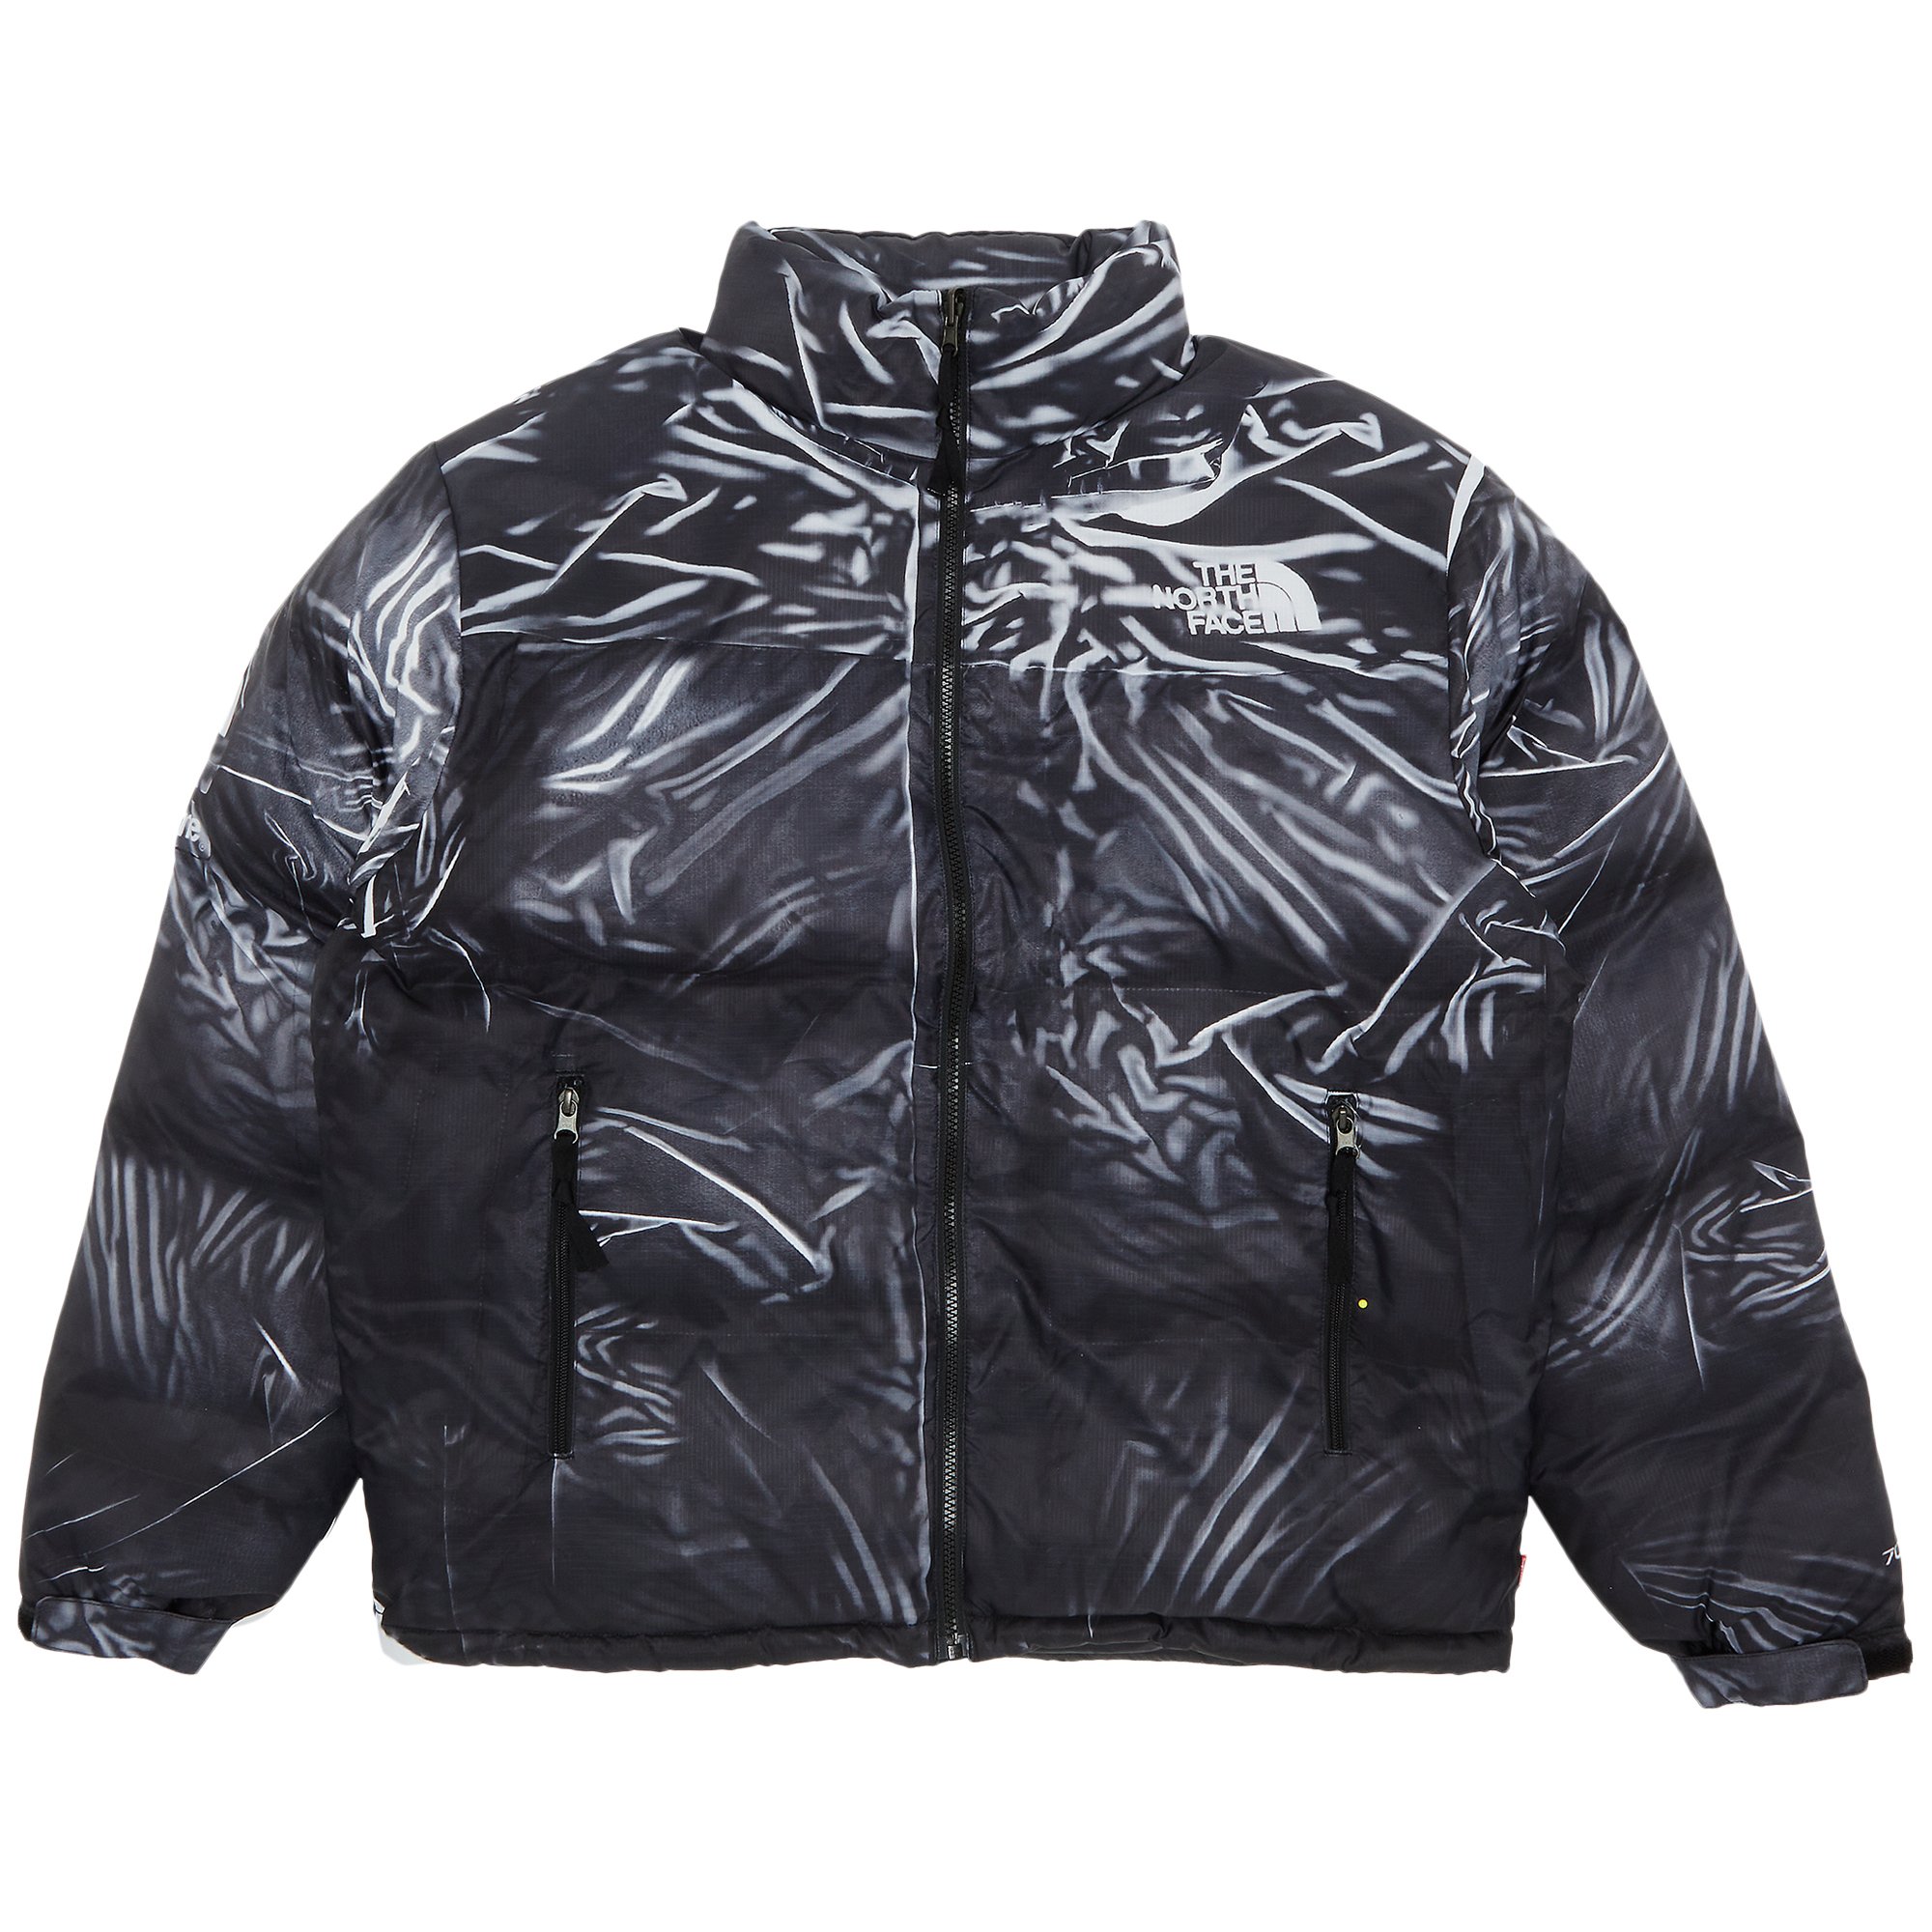 Buy Supreme x The North Face Printed Nuptse Jacket 'Black